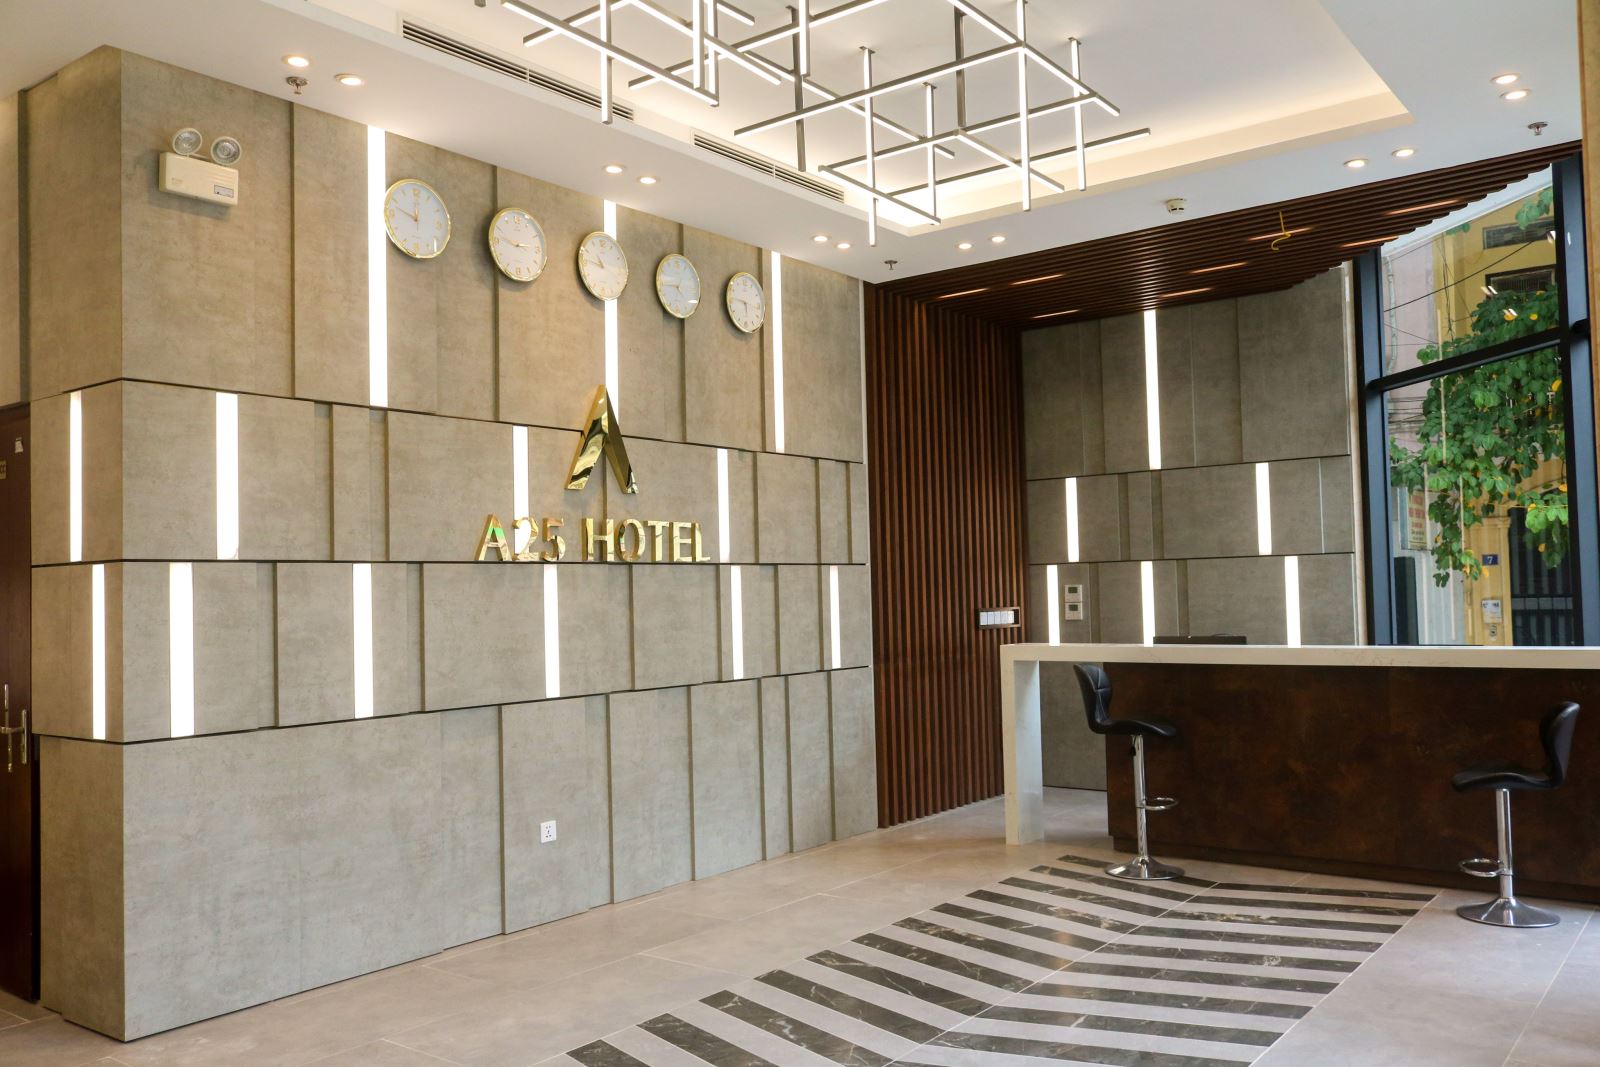 a25-hotel-18-nguyen-hy-quang-dong-da-district-hanoi-city